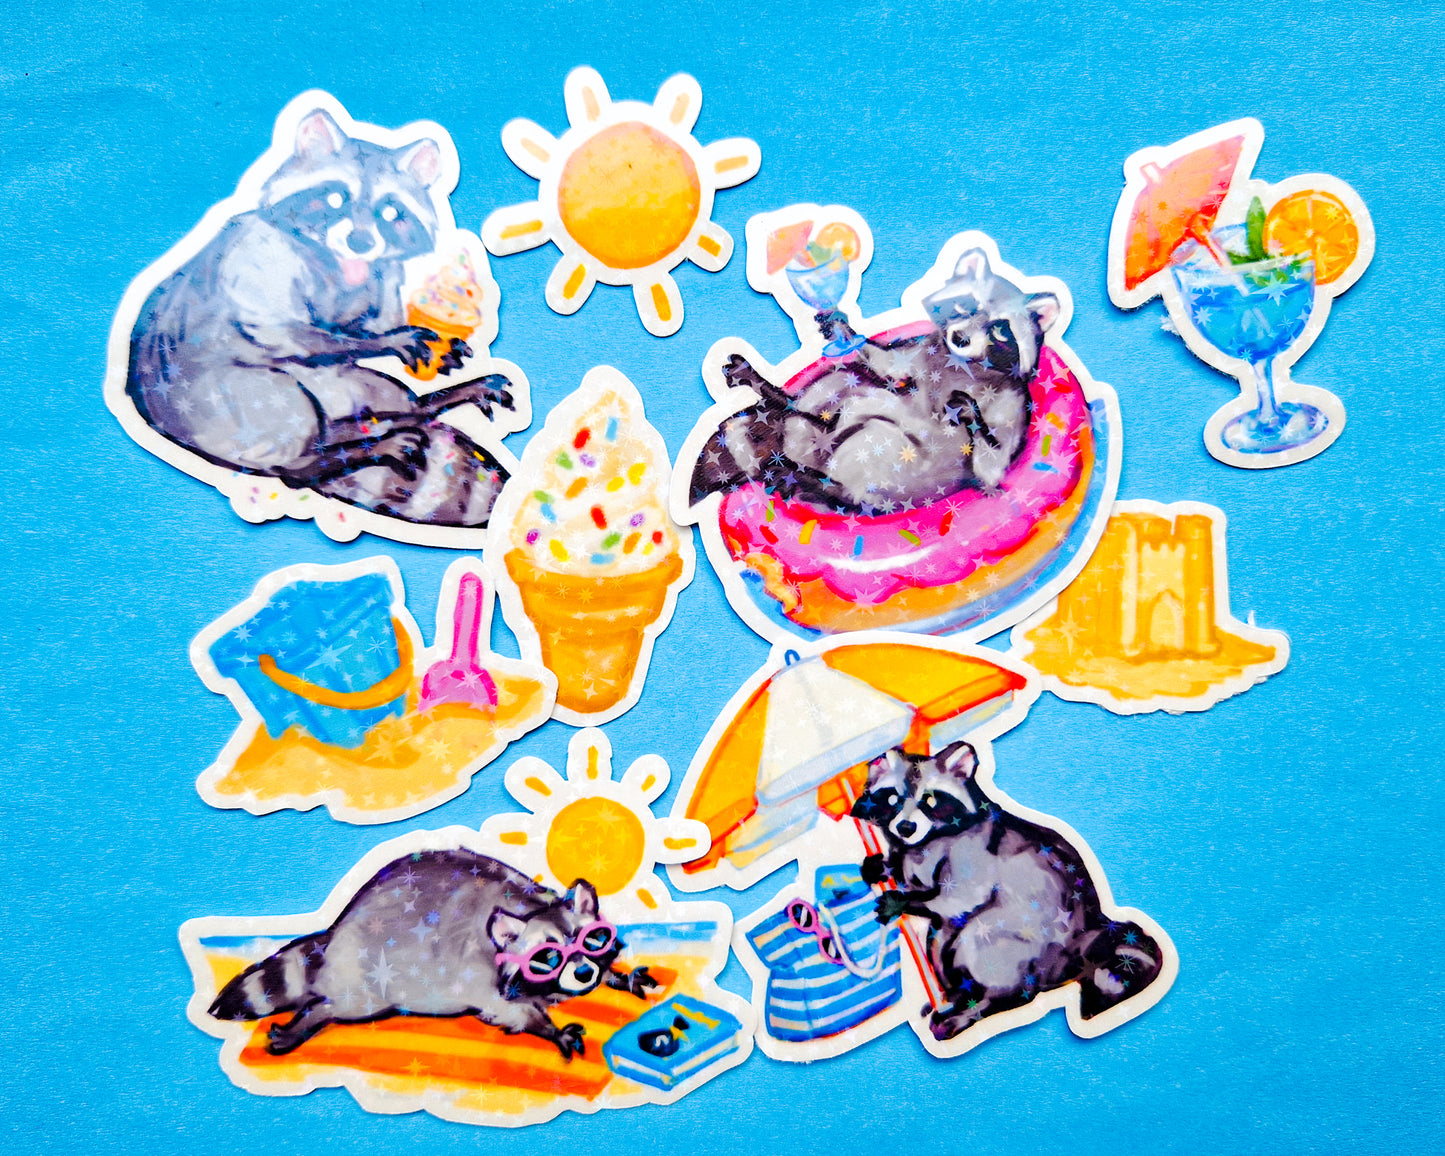 Beach Raccoon Sticker Pack - 9 Holographic Vinyl Stickers